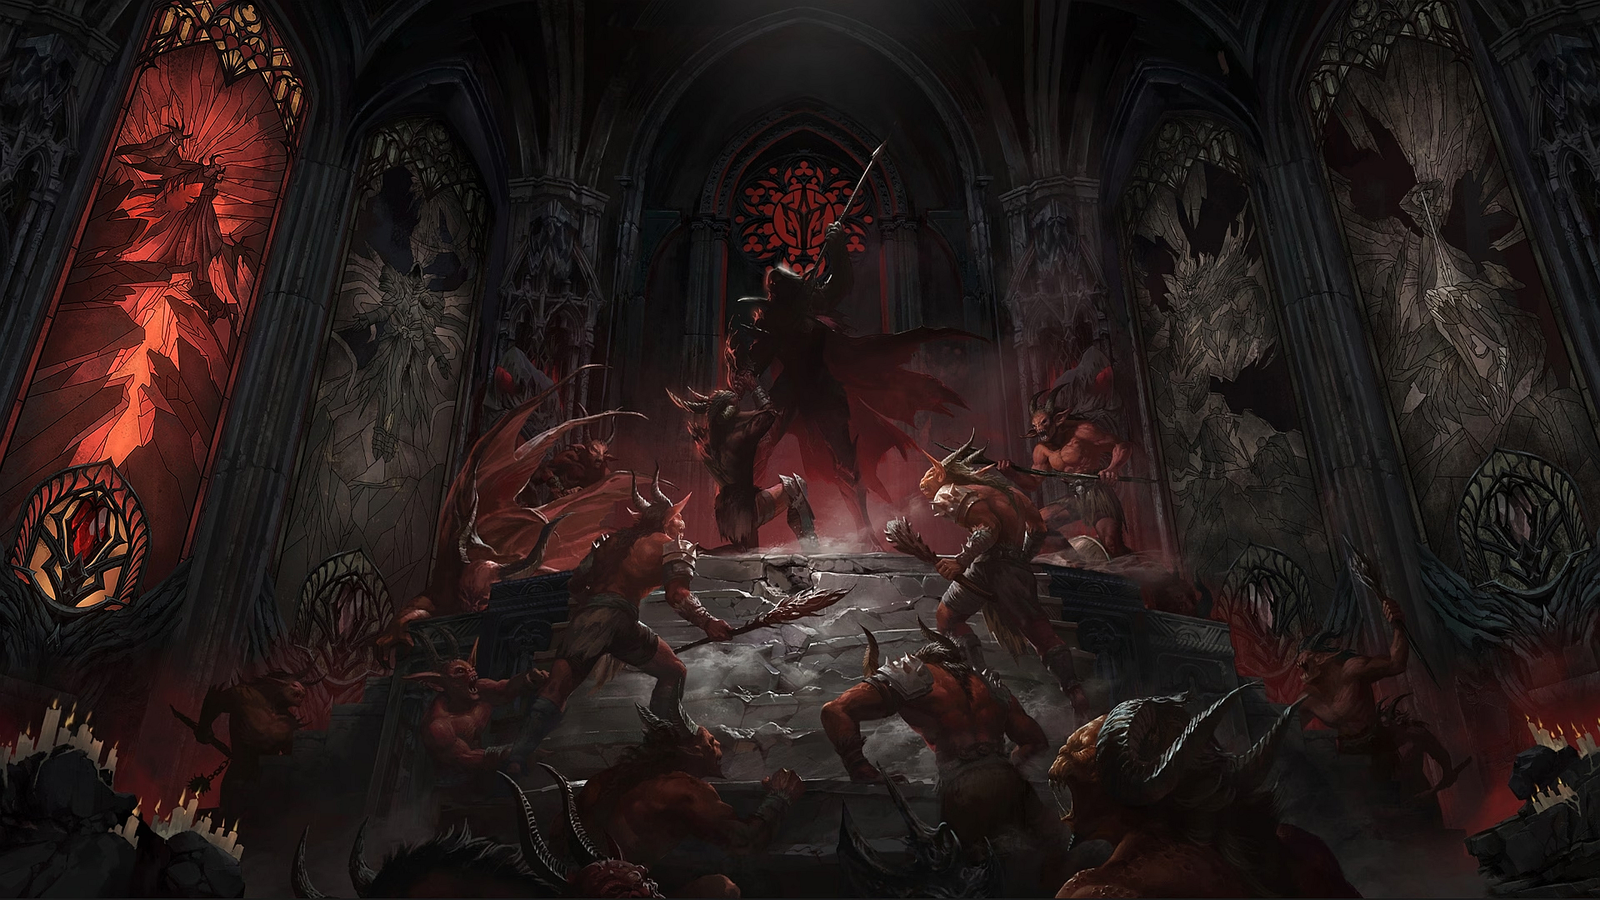 Diablo Immortal Update — Diablo Immortal — Blizzard News